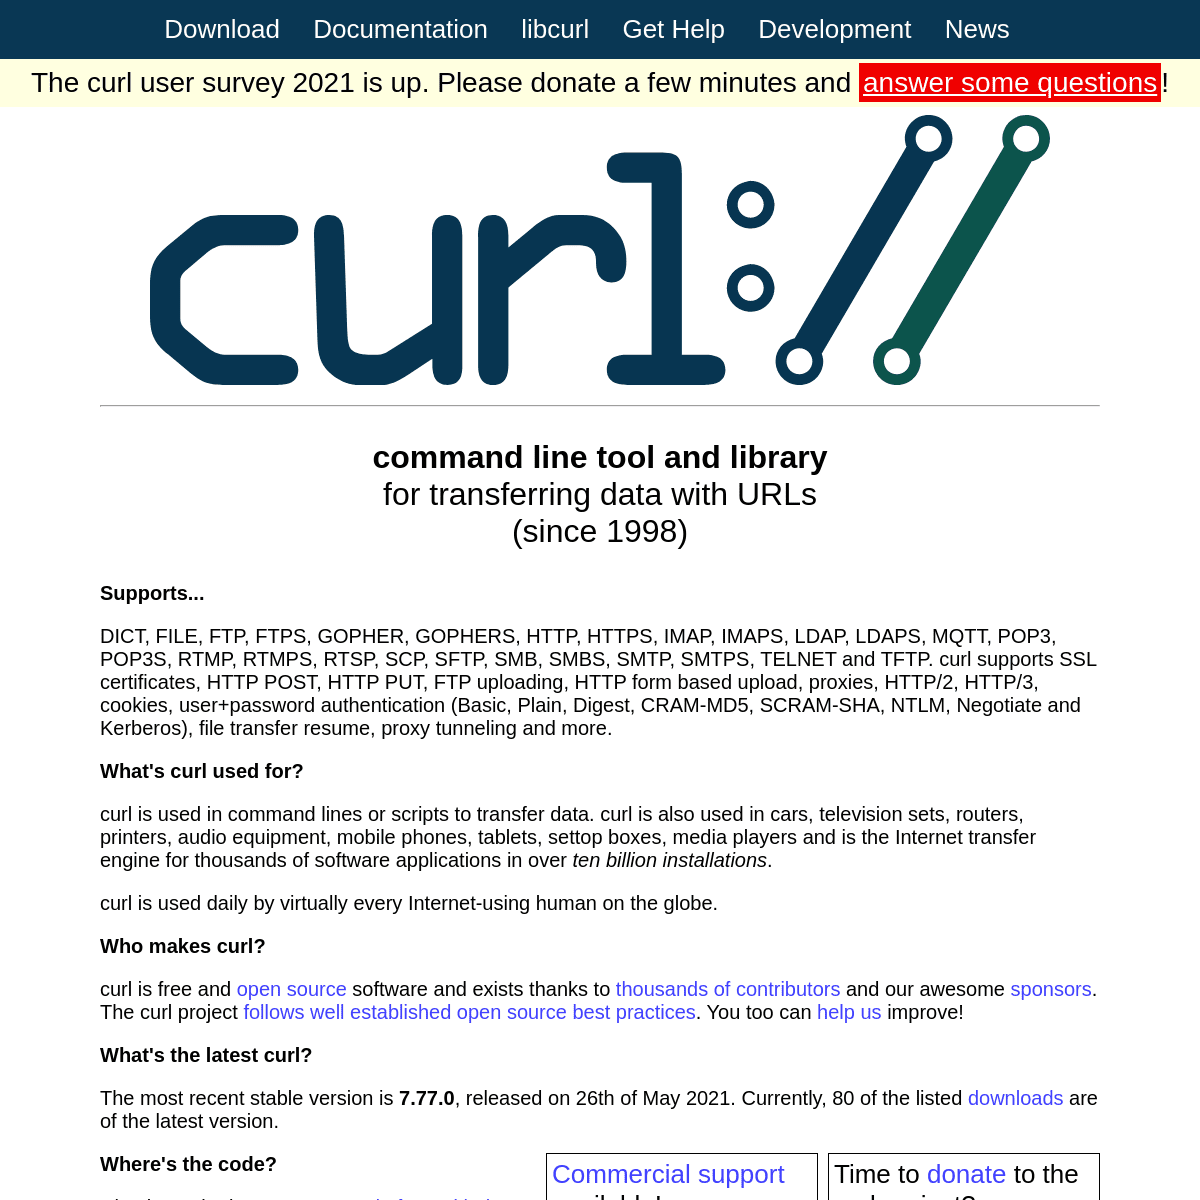 A complete backup of https://curl.se